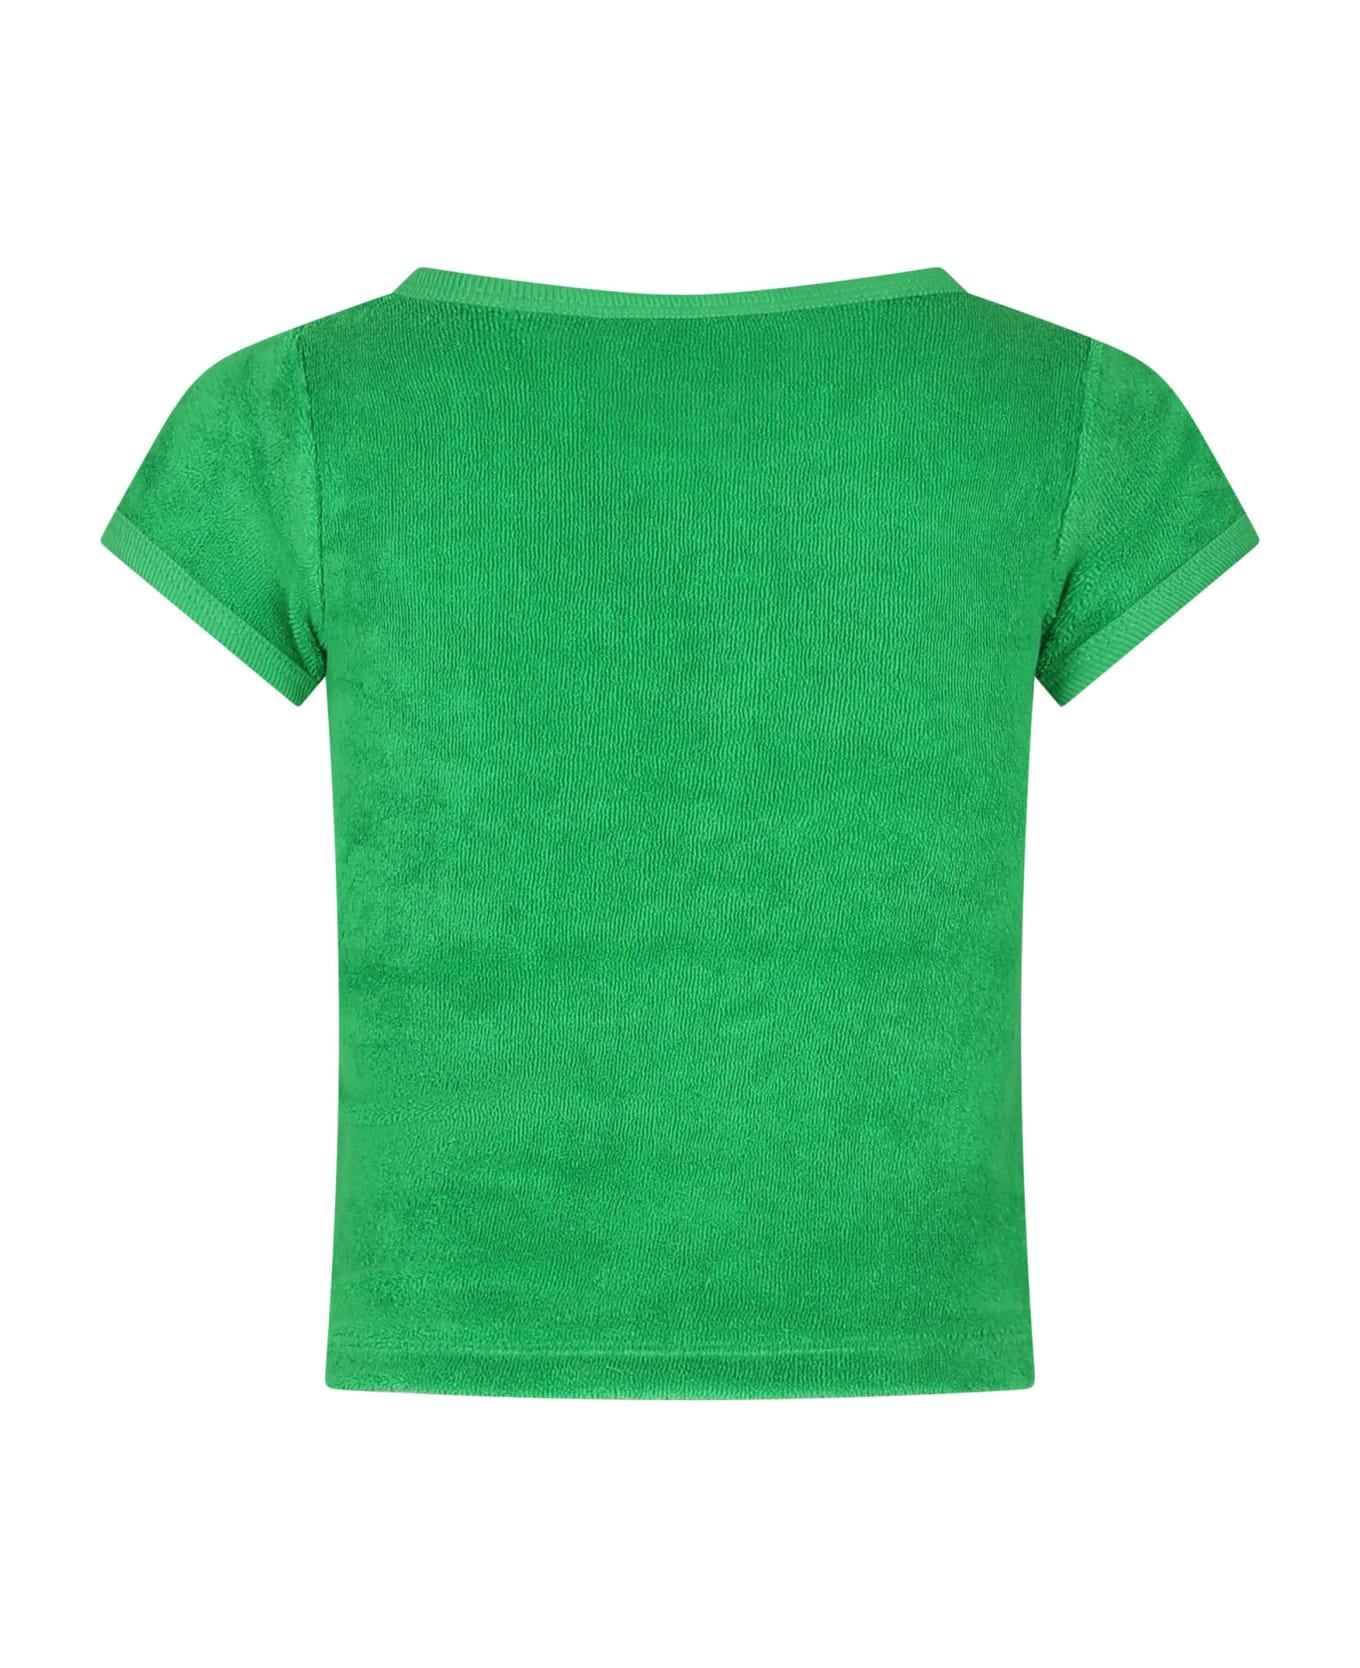 Molo Green T-shirt For Girl - Green